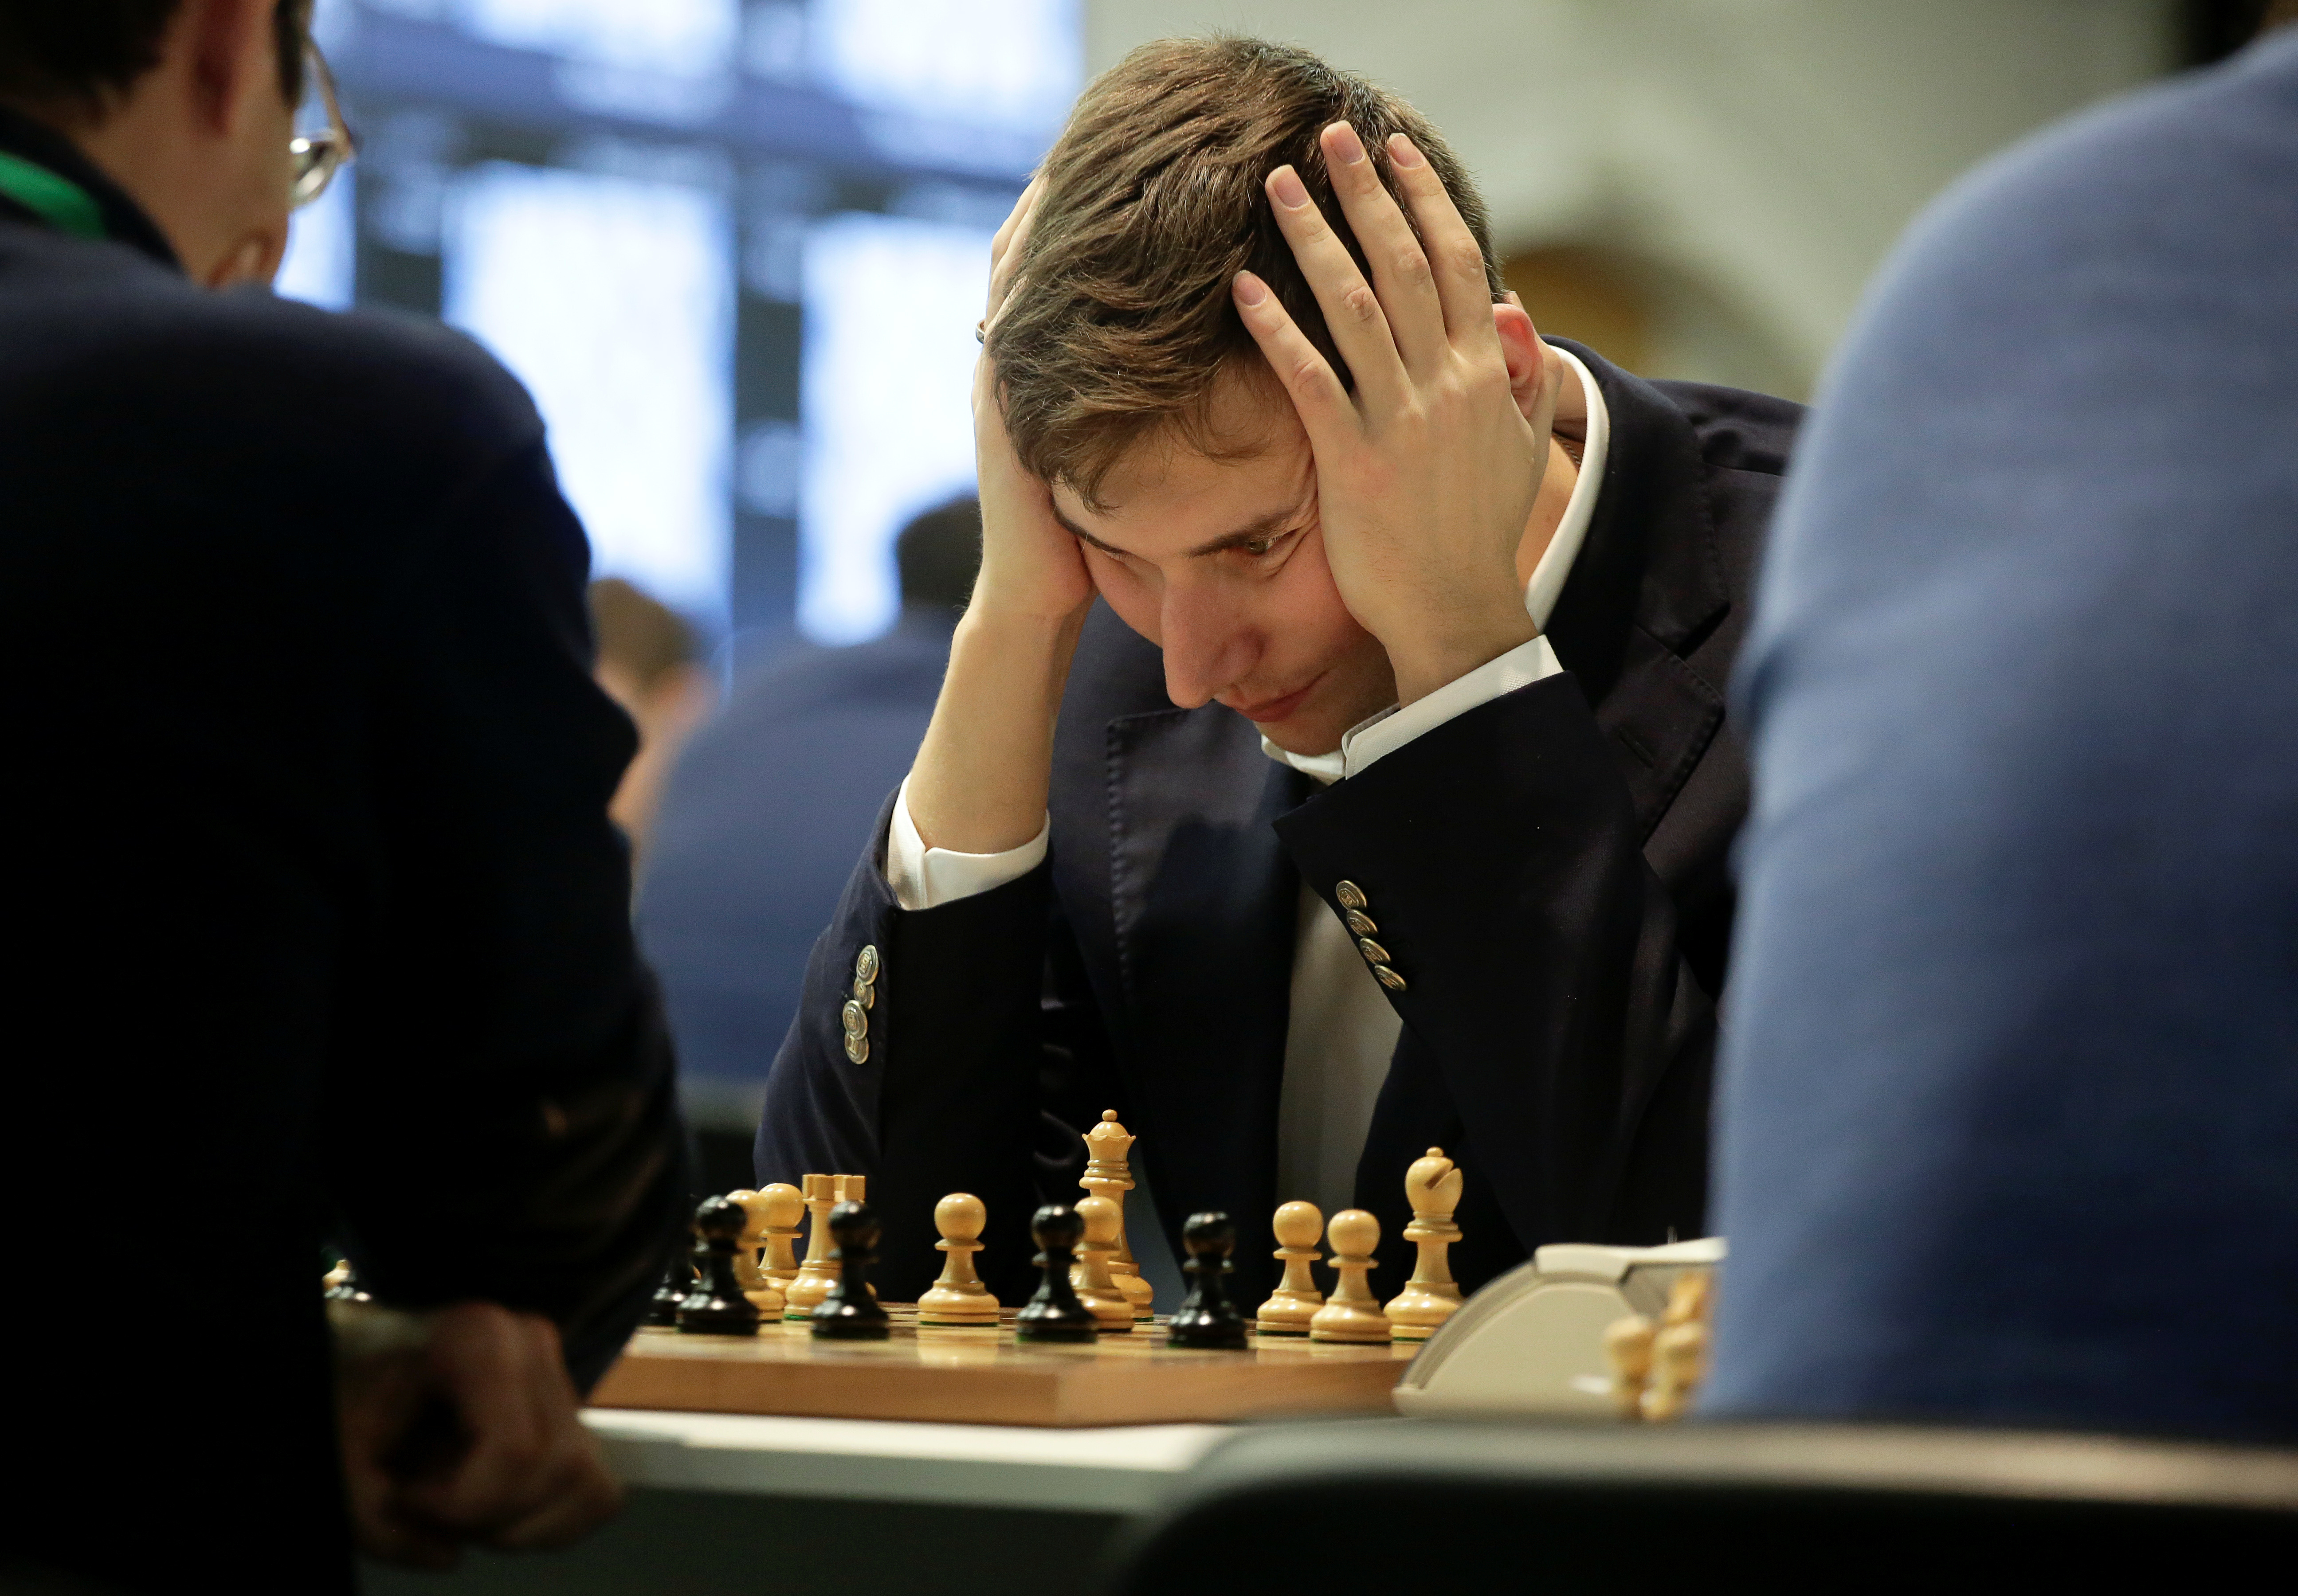 World Chess Championship 2023: Reactions, Statistics, and